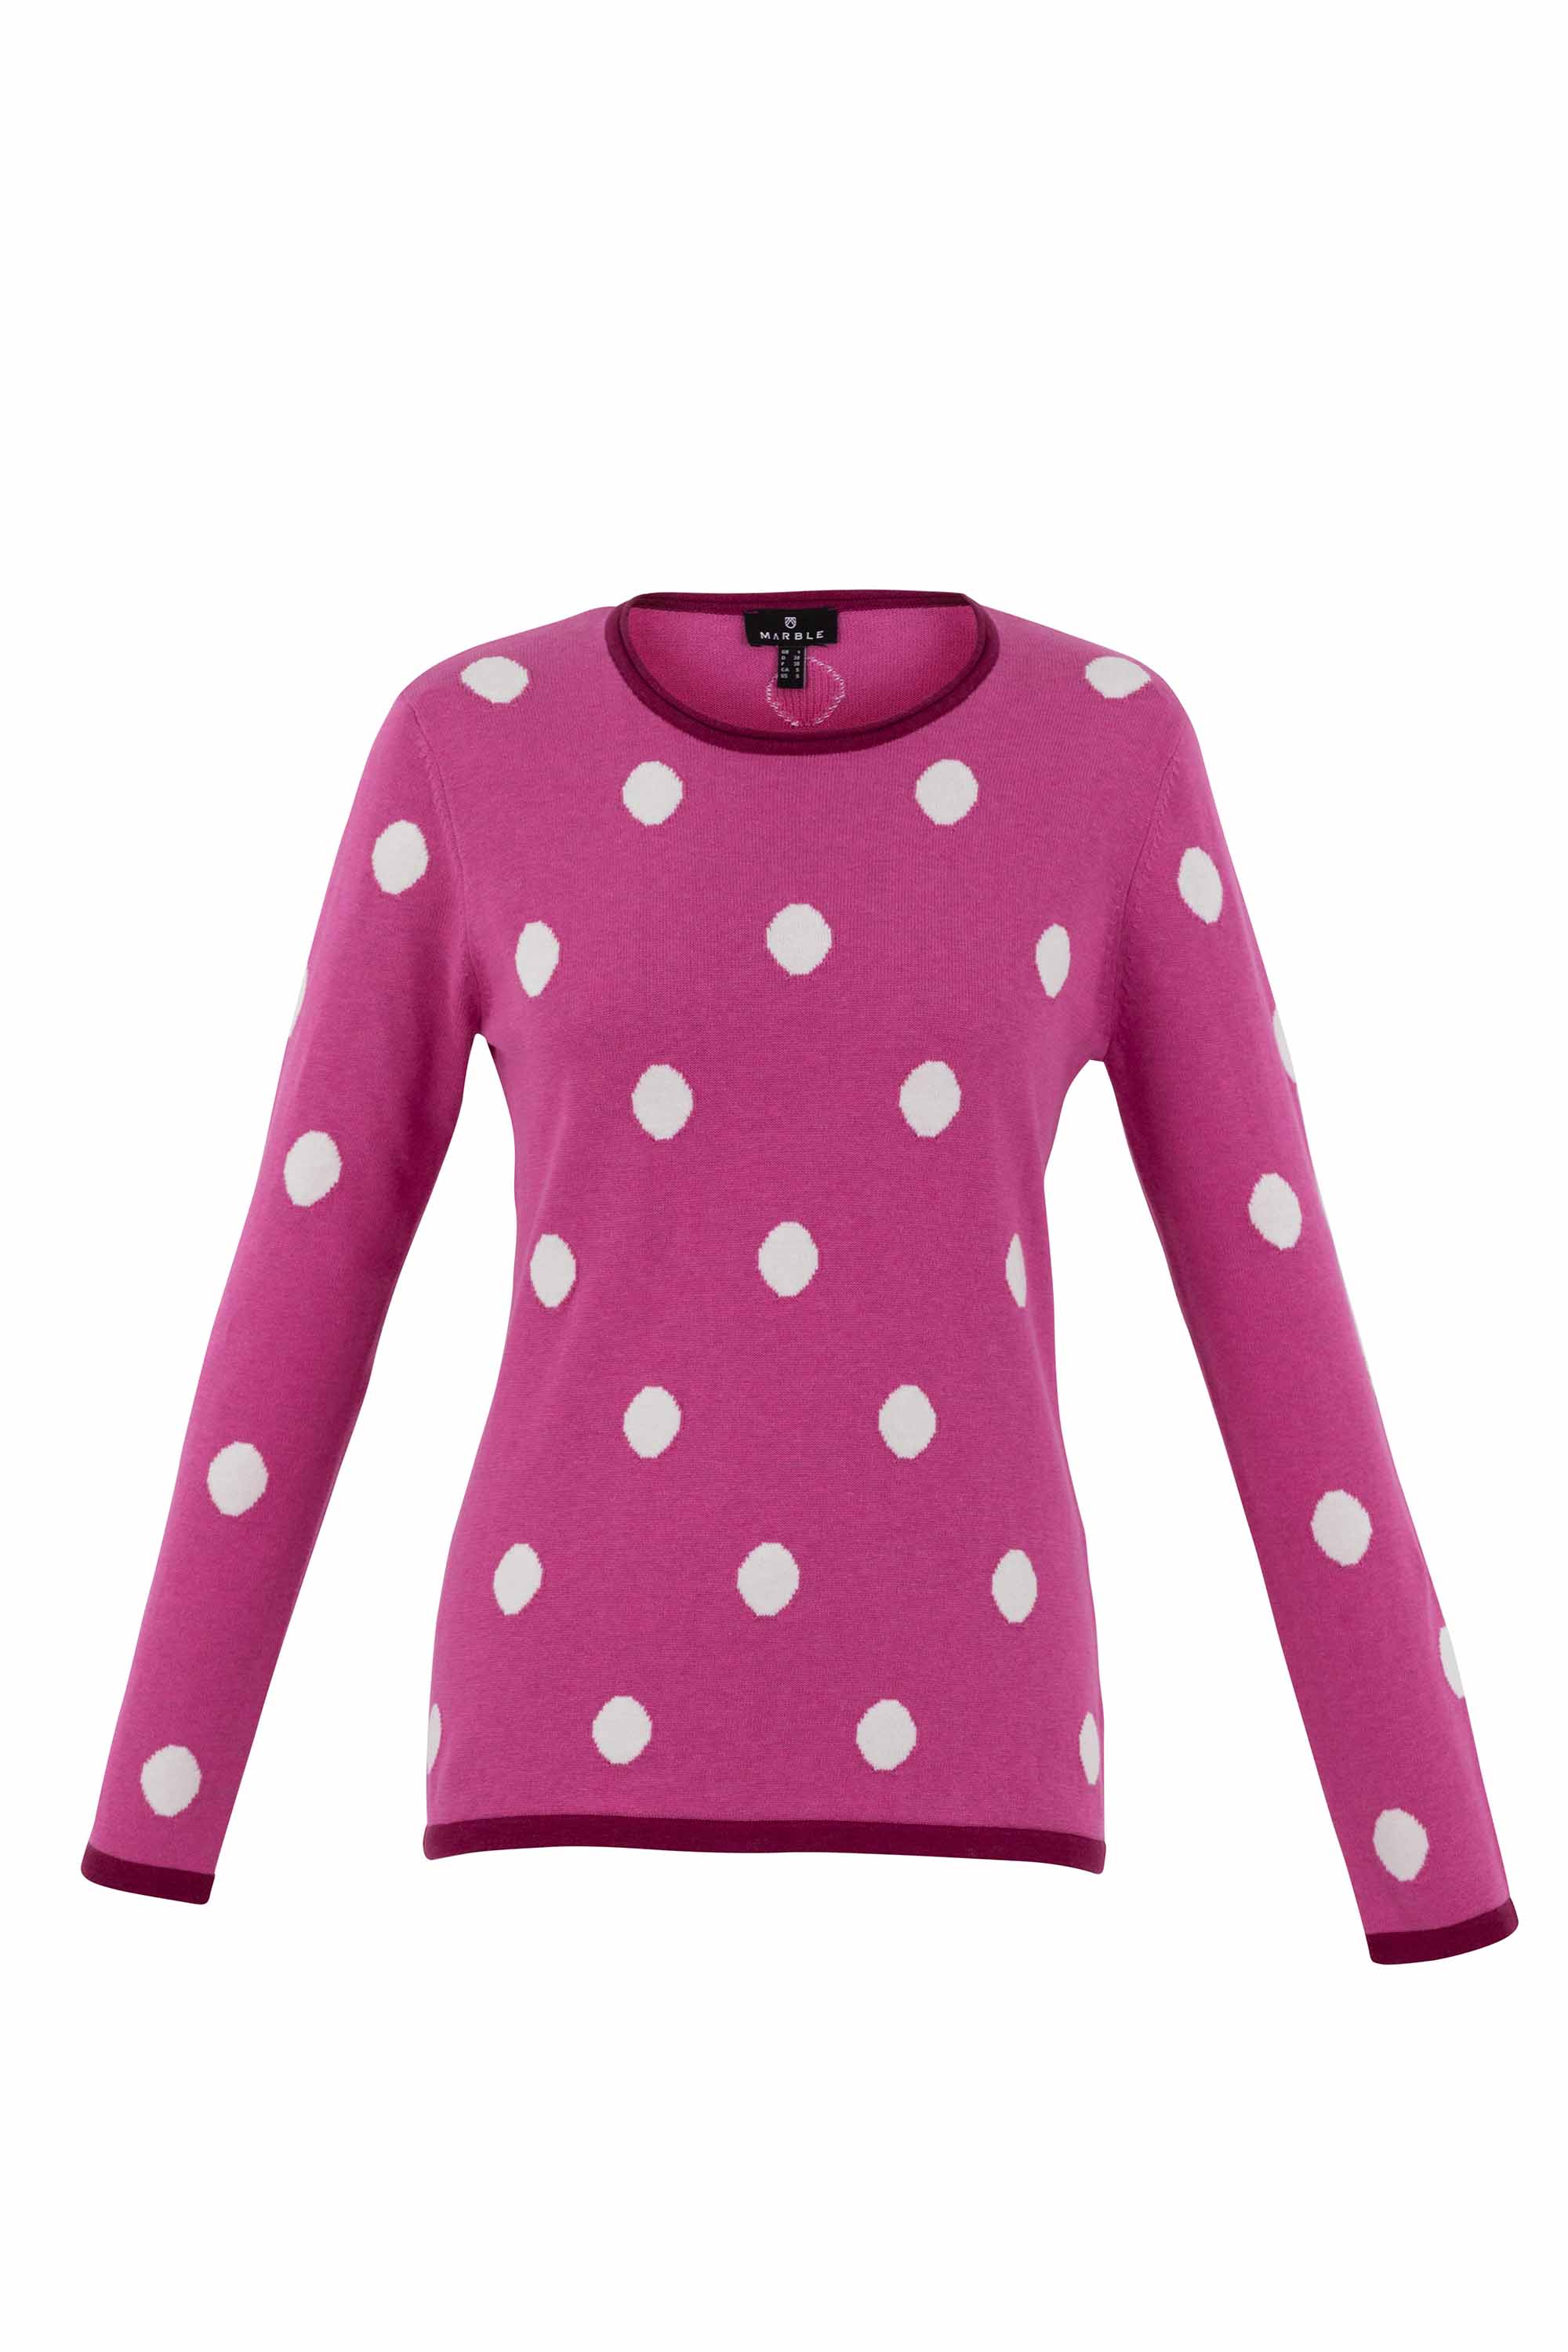 Polka Dot Sweater 6385 (2 Colors)